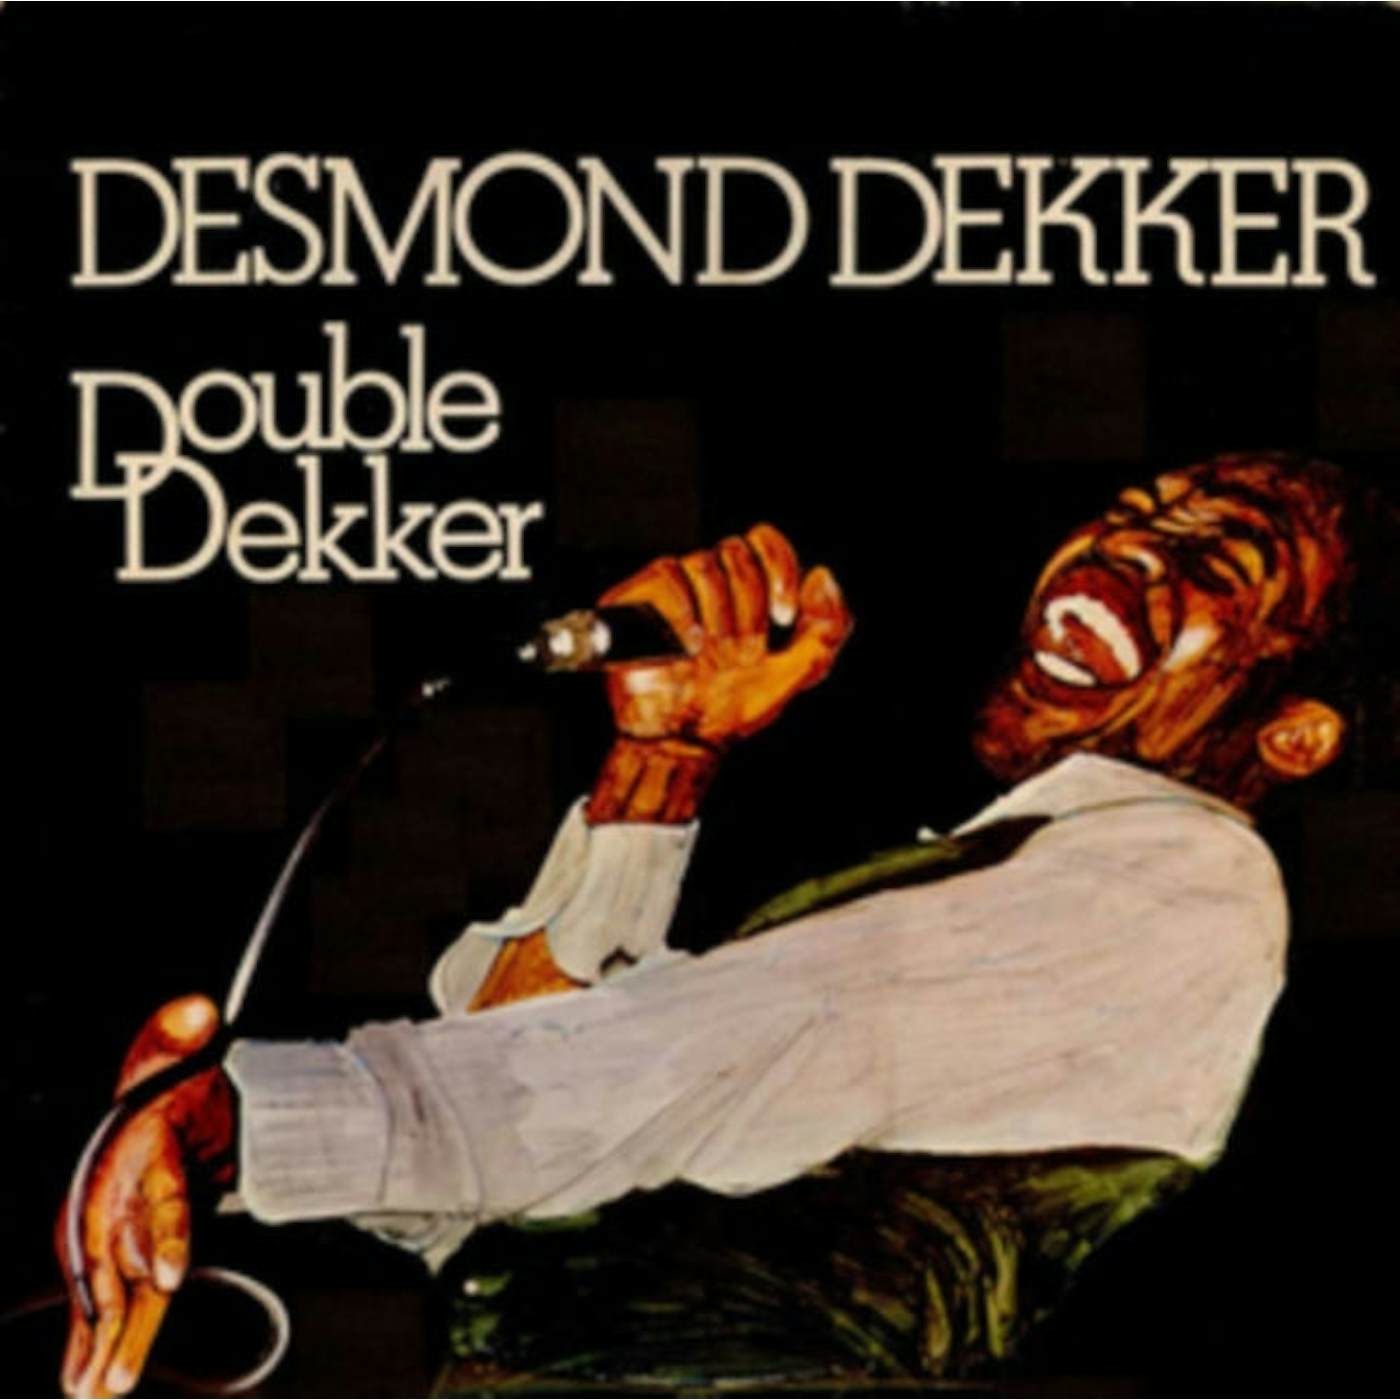 Desmond Dekker CD - Double Dekker (Expanded Edition)